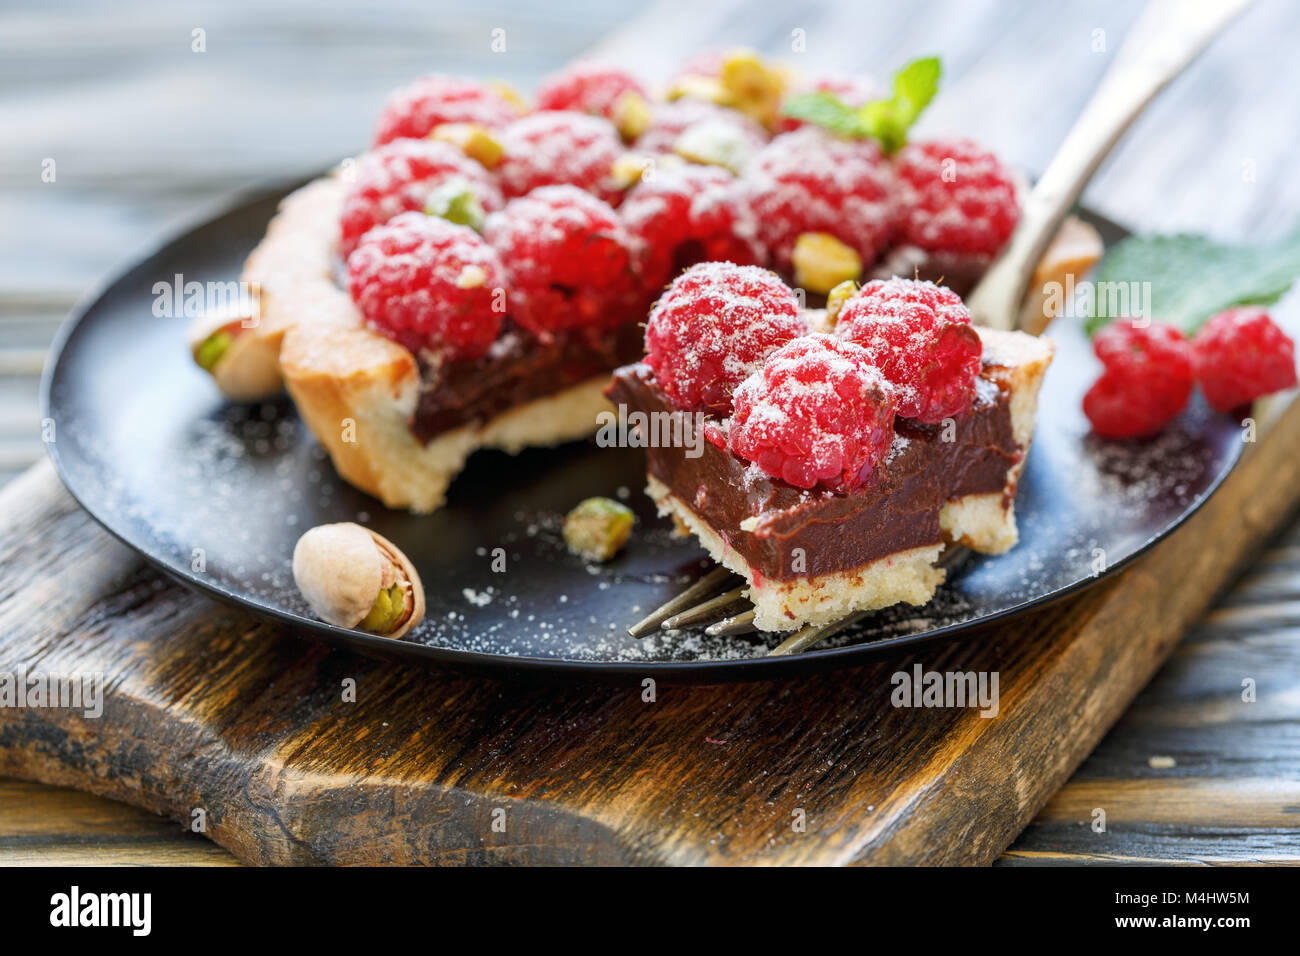 Mini tart with fresh raspberries and a fork. Stock Photo